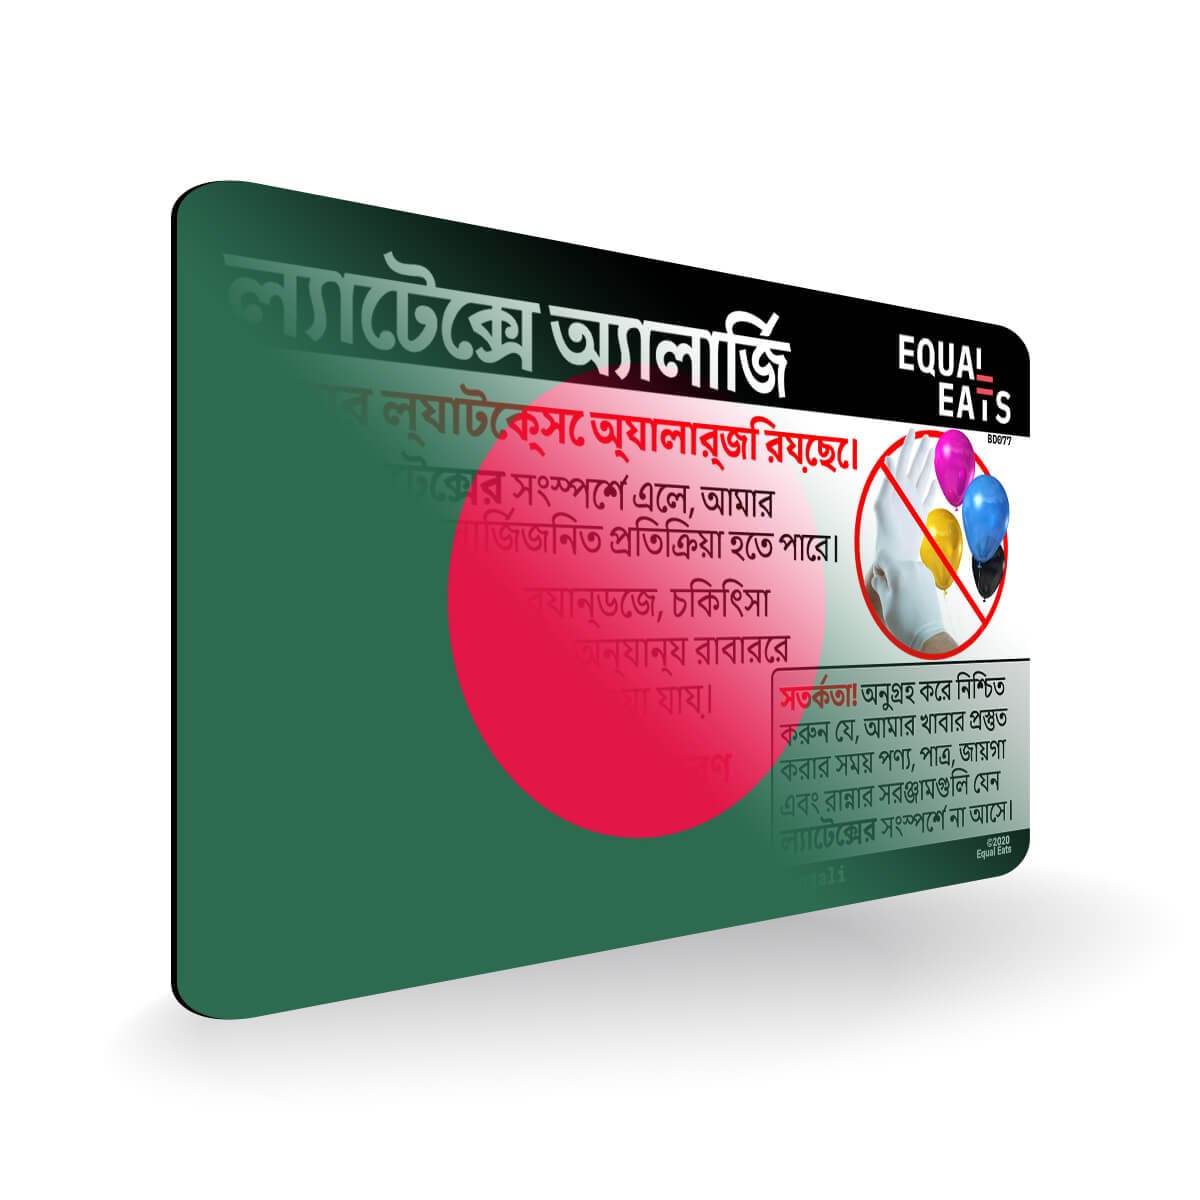 Latex Allergy in Bengali. Latex Allergy Travel Card for Bangladesh